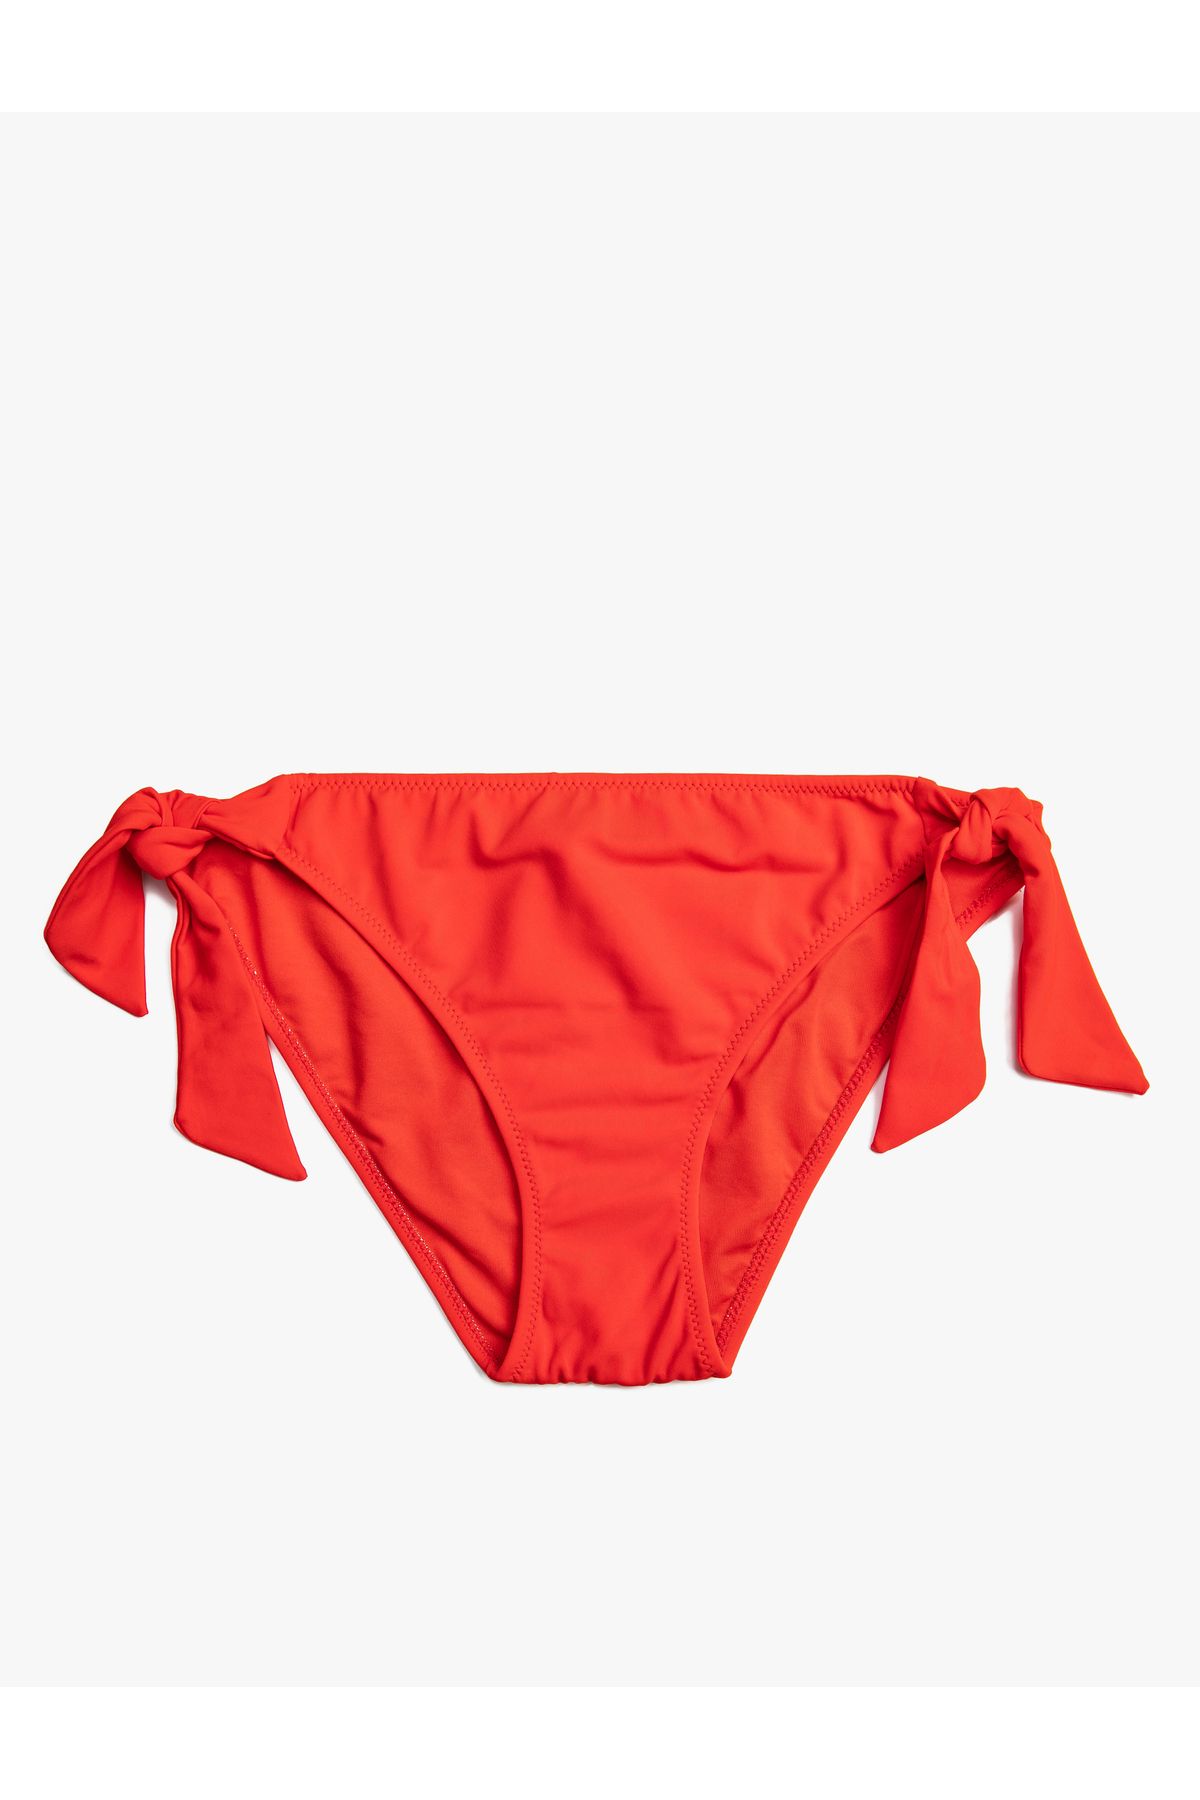 Trendyol Collection Red Thong High Waist High Leg Bikini Bottom